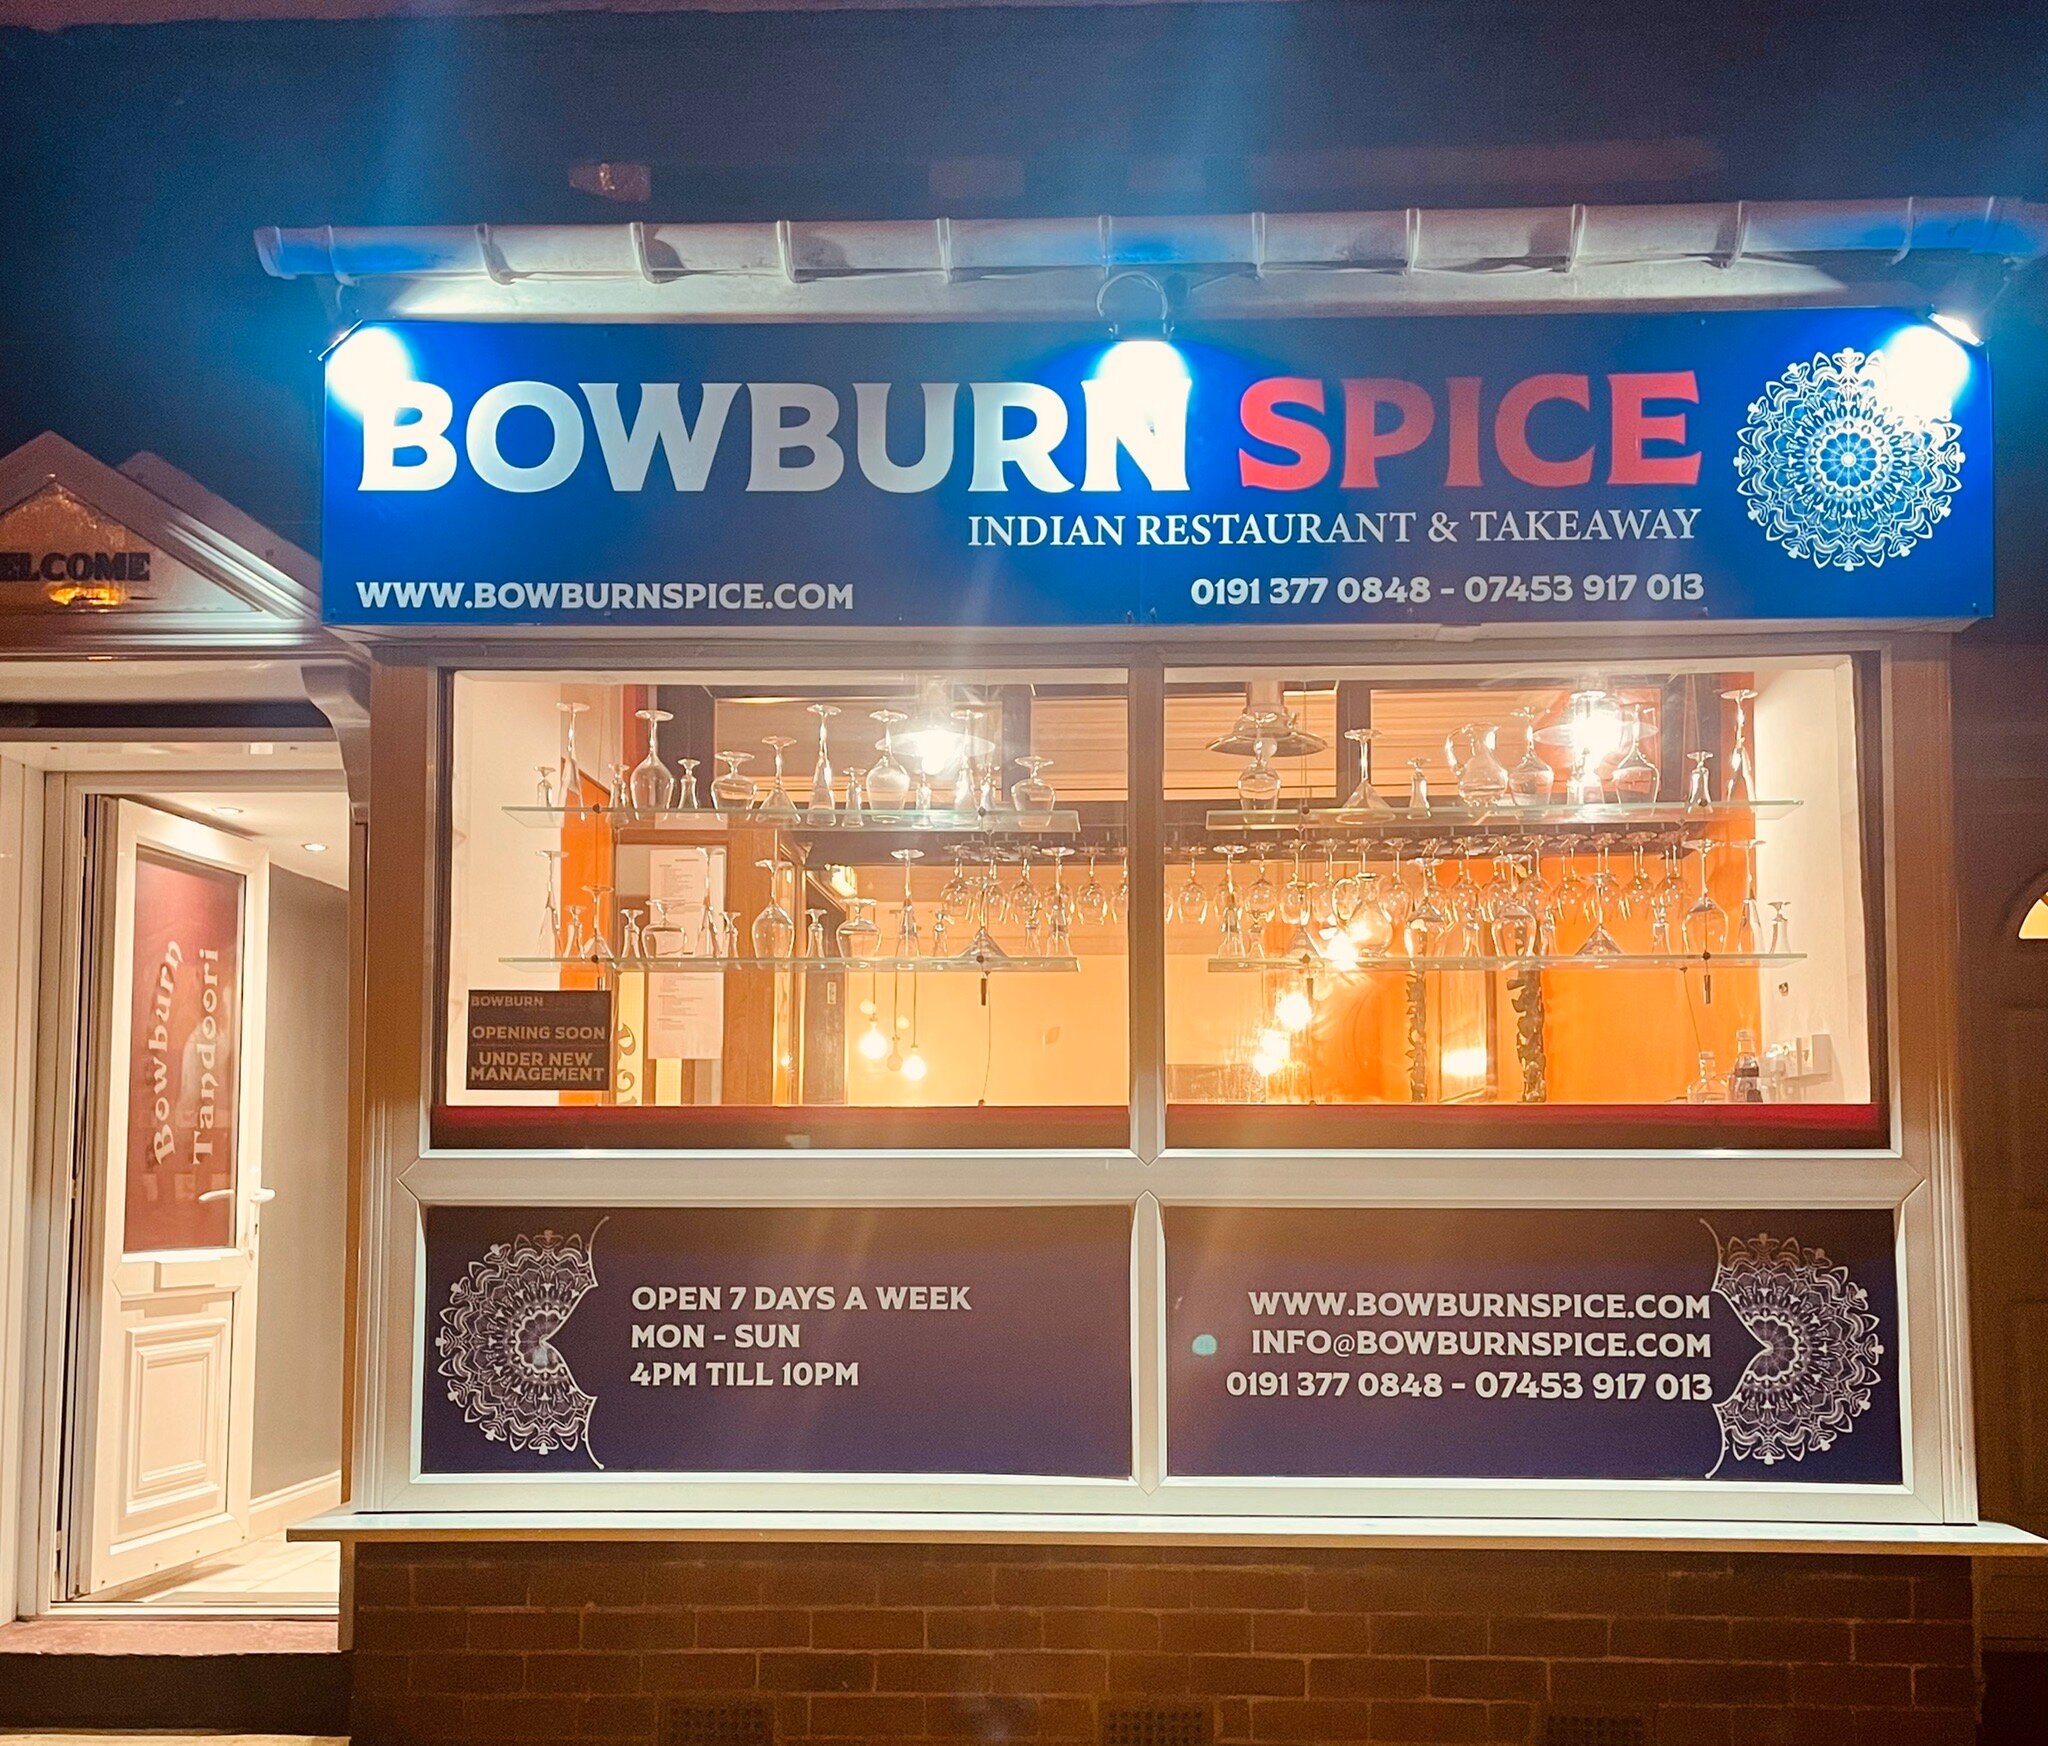 Bowburn spice indian restaurant & takeaway.